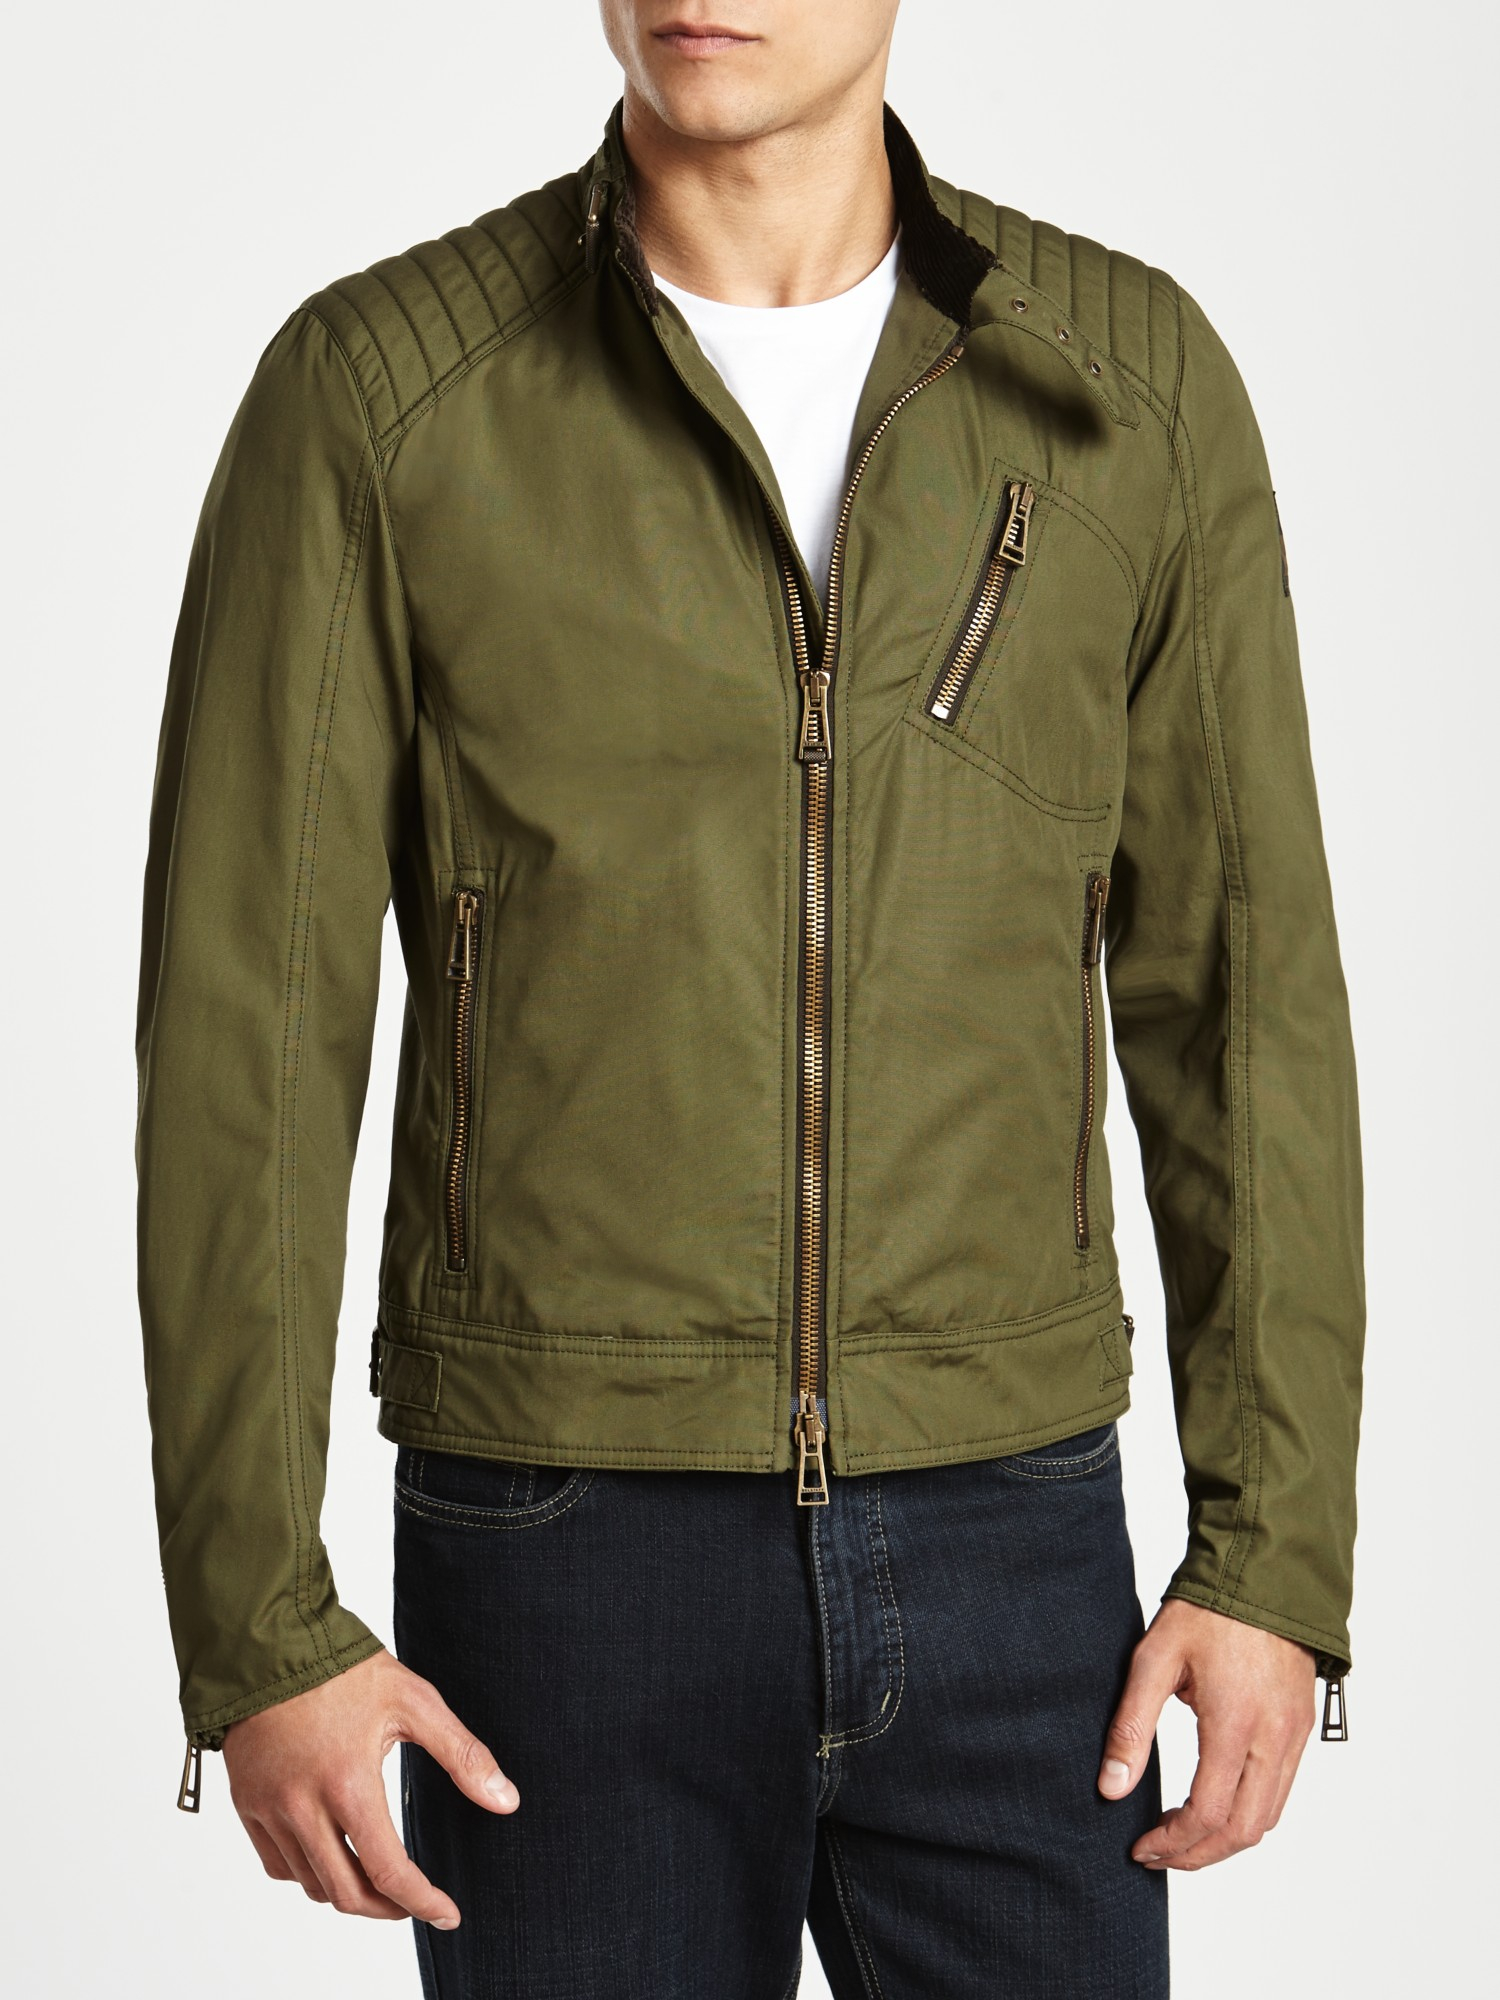 Belstaff Kirkham Cotton Canvas Jacket in Olive (Green) for Men - Lyst